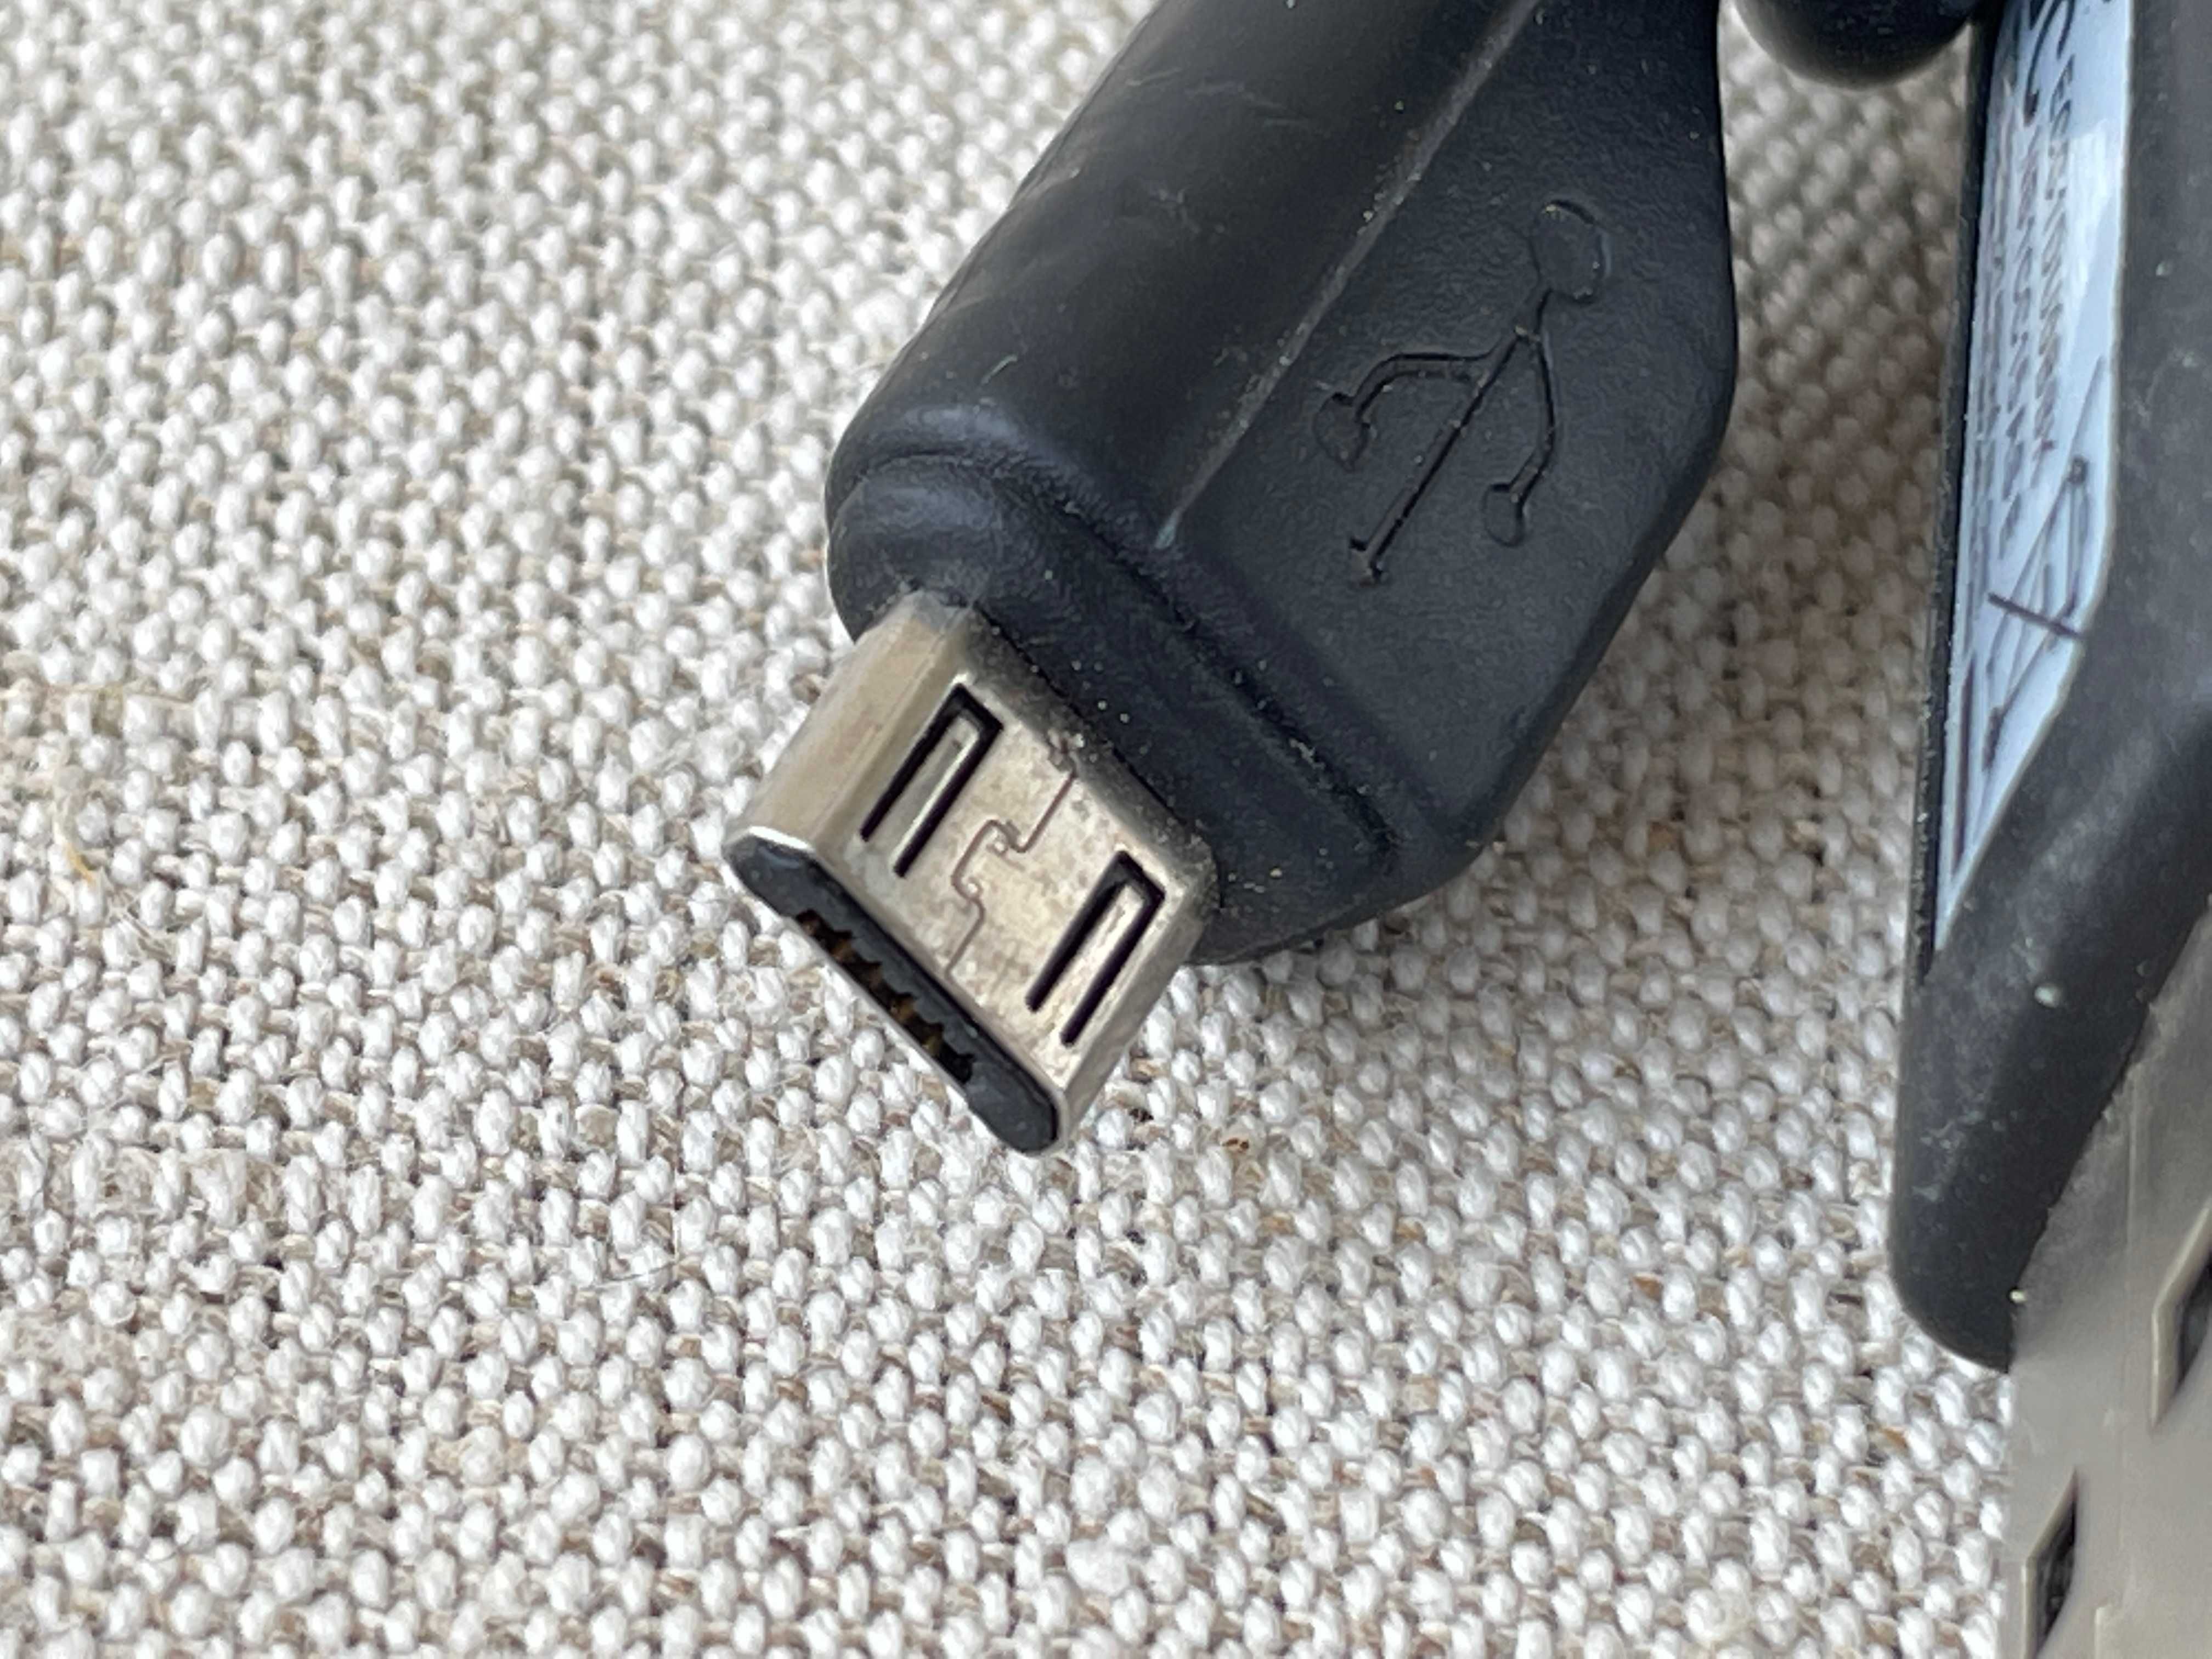 Kabel, Przewód USB-A / USB-micro-B, Samsung ECC1DU0BBK